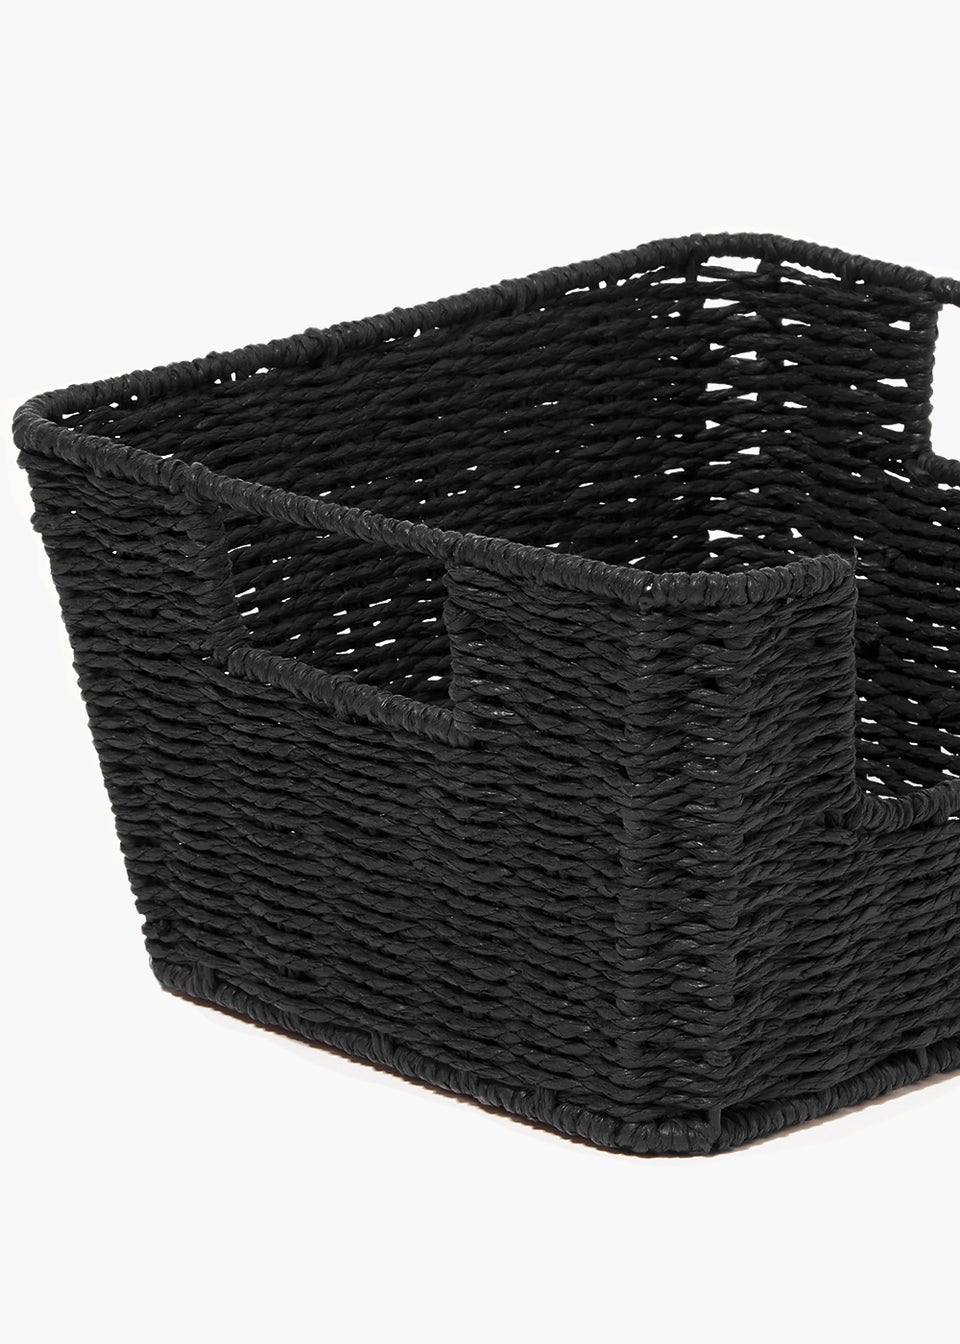 Black Woven Basket (25cm x 25cm x 15cm)